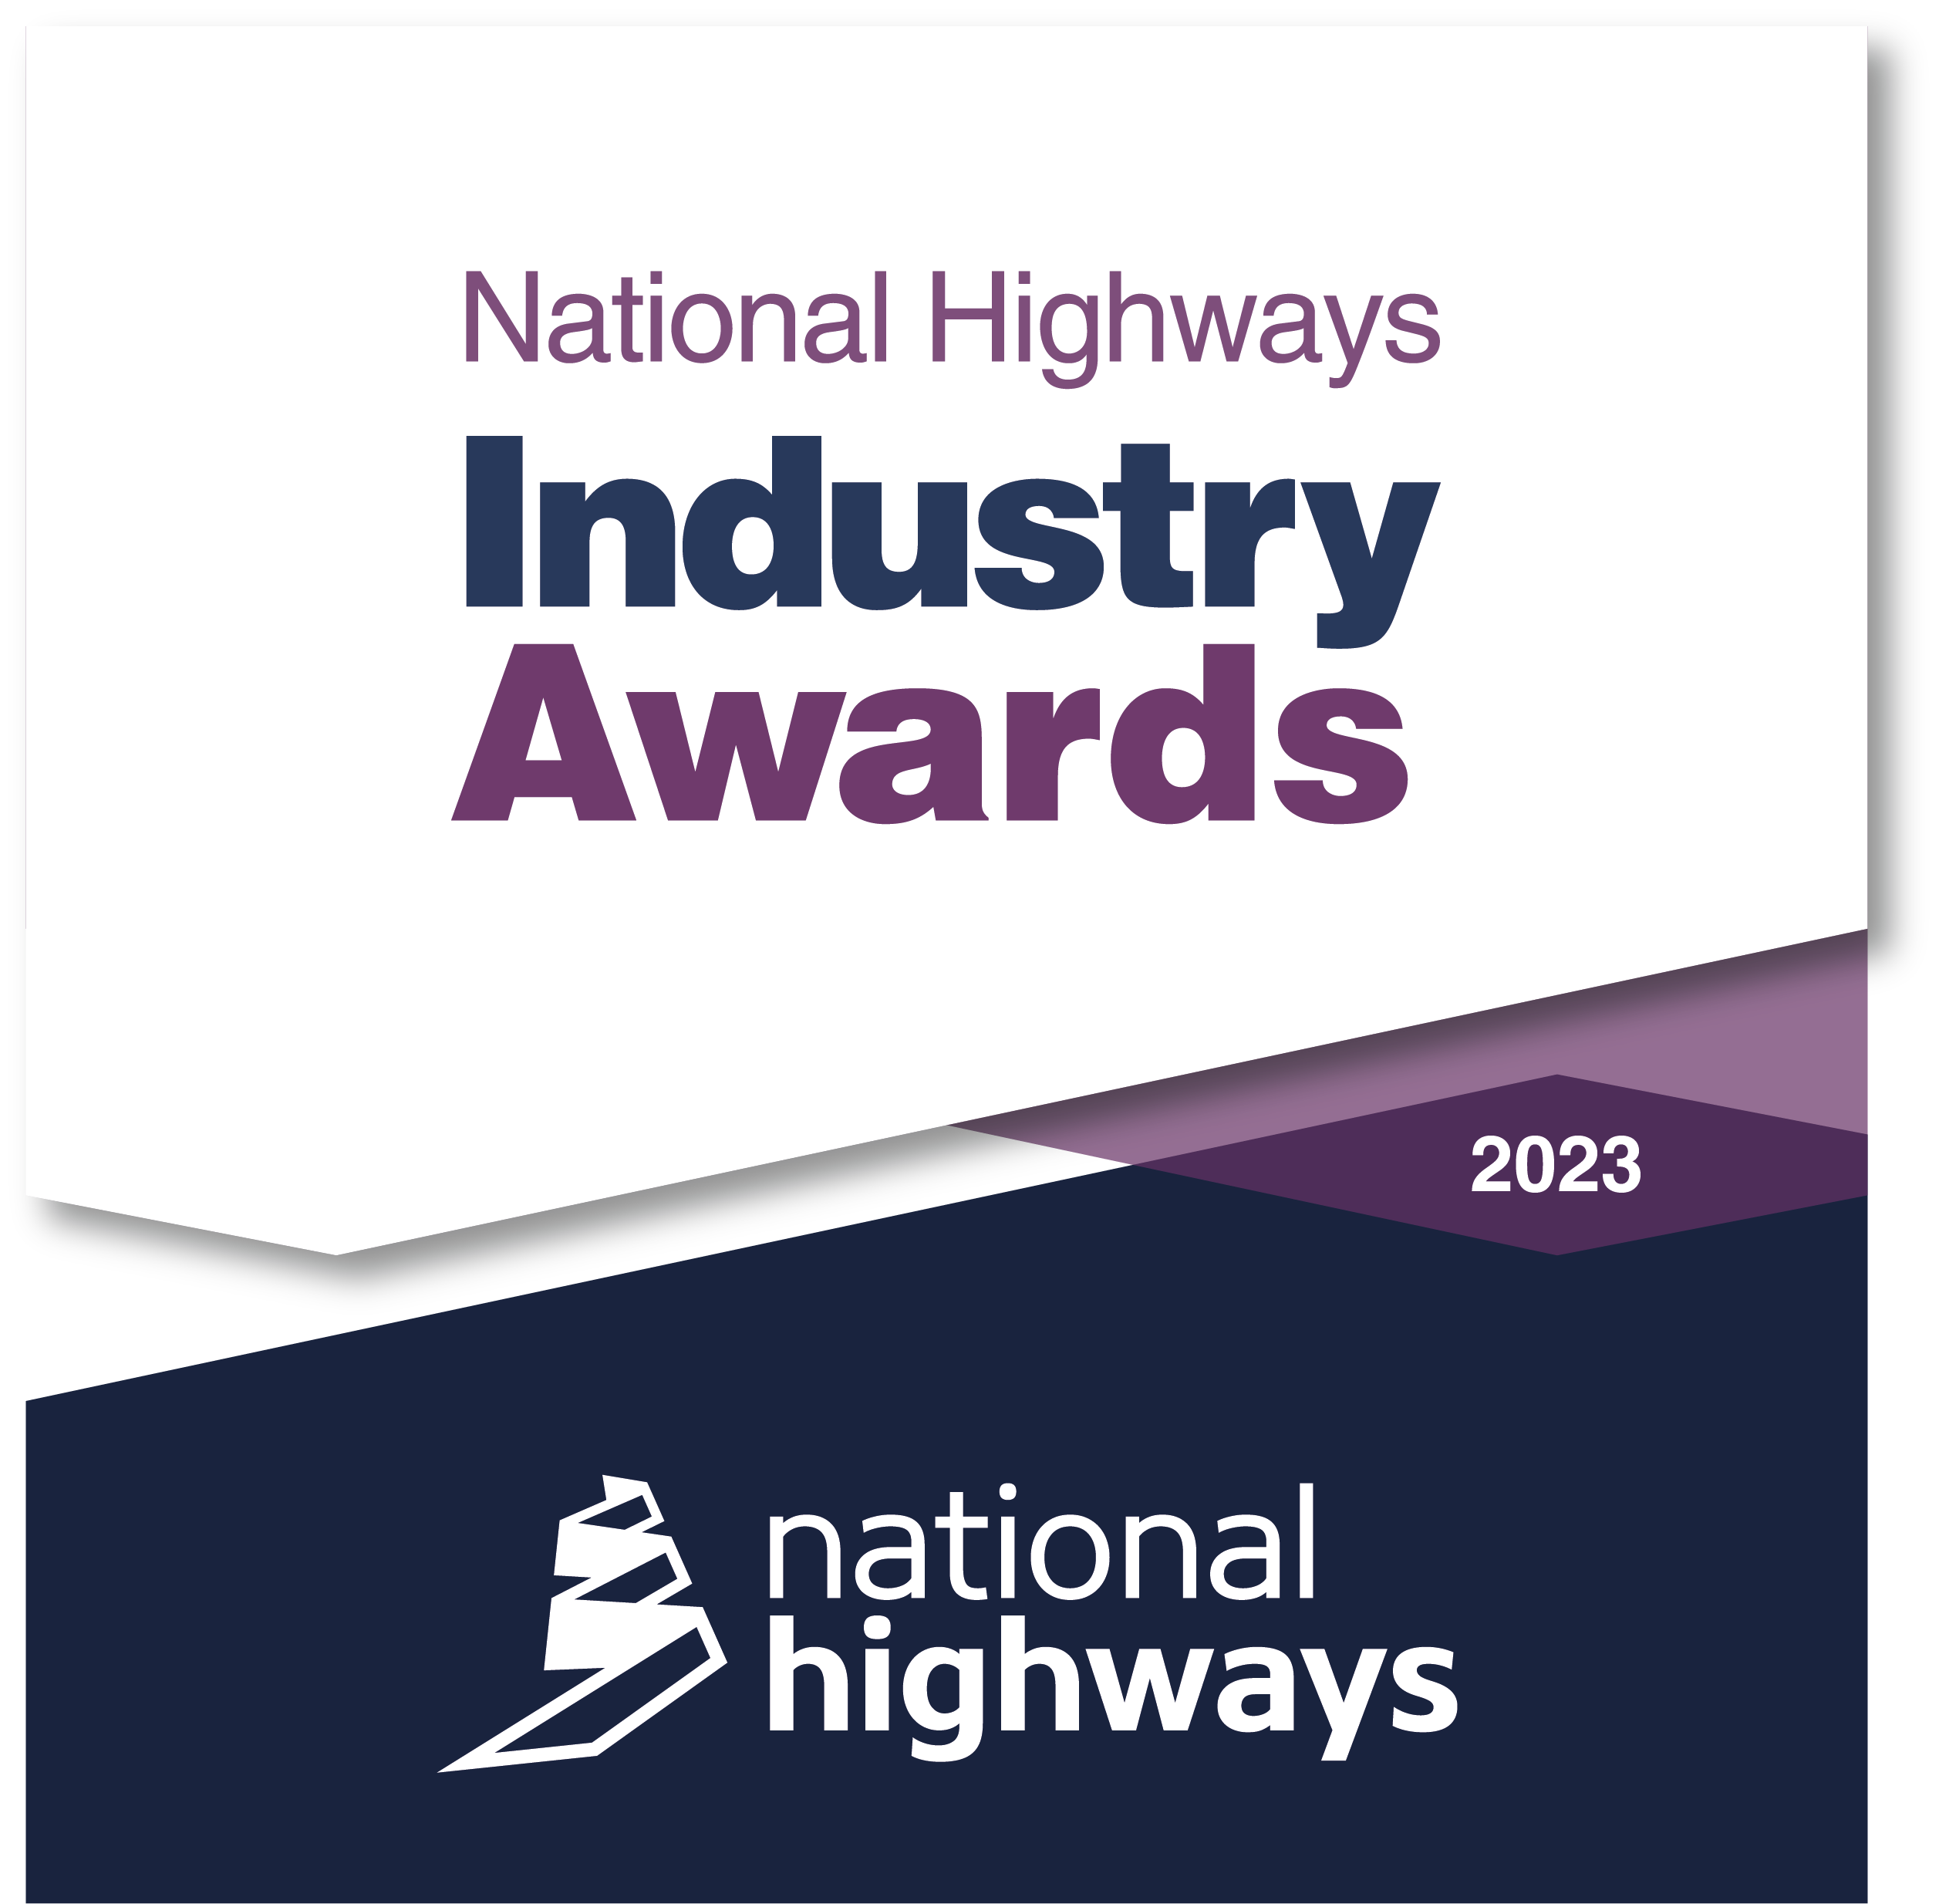 National Highways Industry Awards 2023